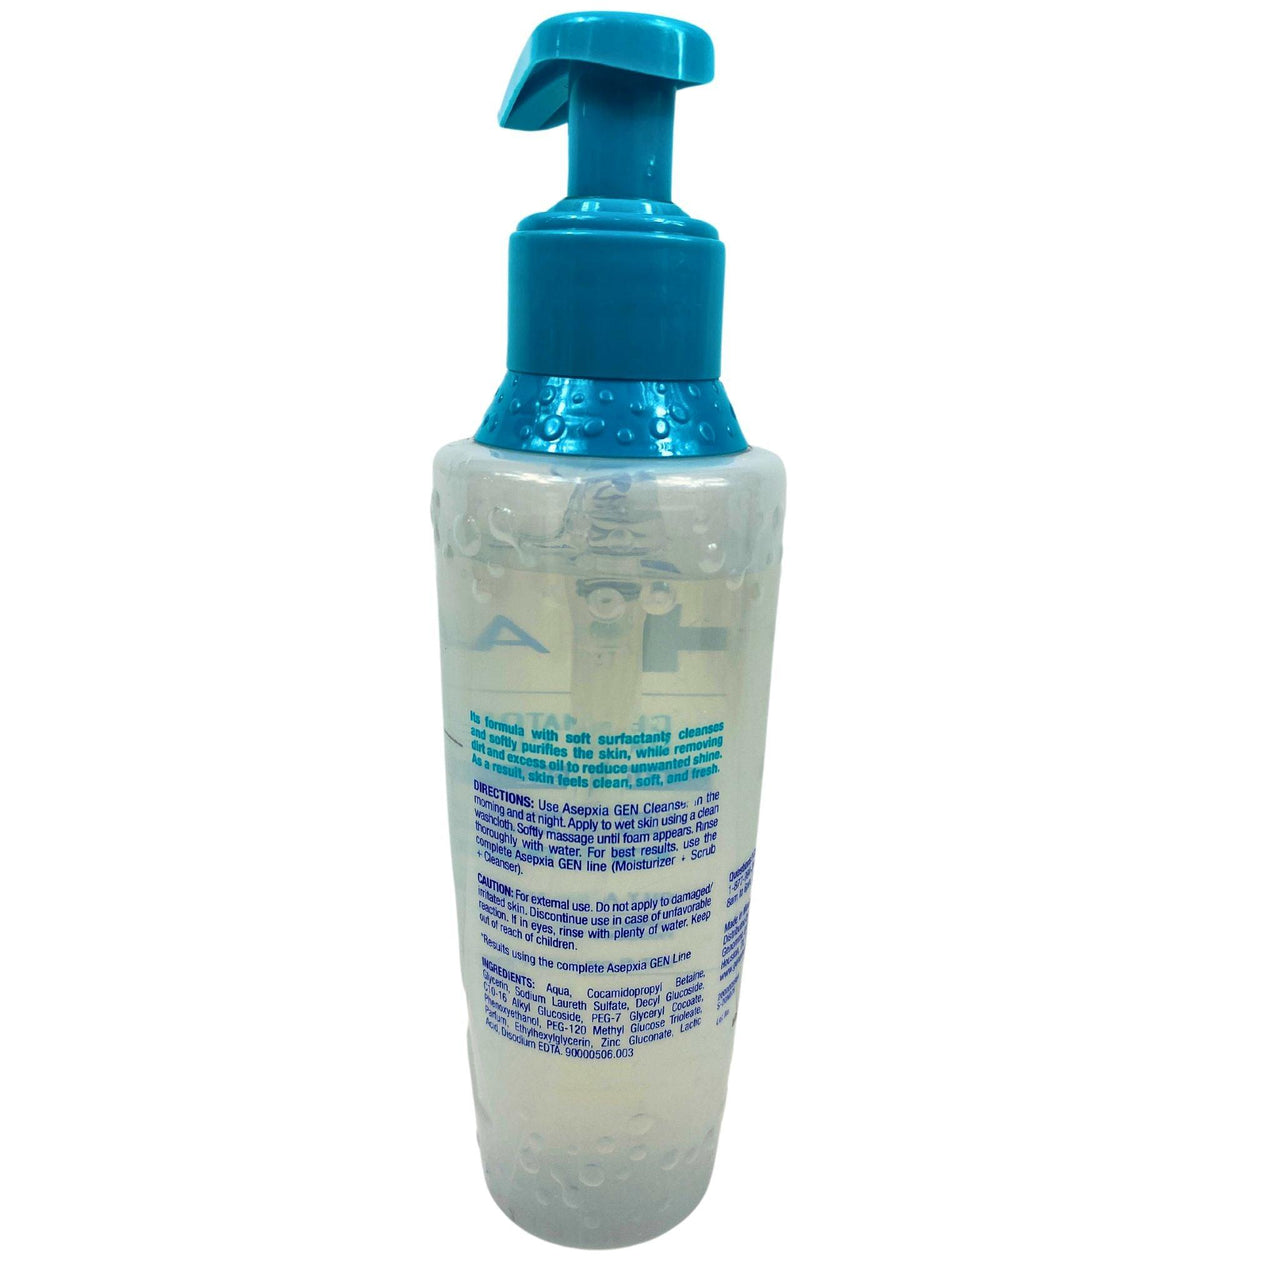 Asepxia Gen Daily Cleanser Facial Gel 6.7OZ (60 Pcs Lot) - Discount Wholesalers Inc